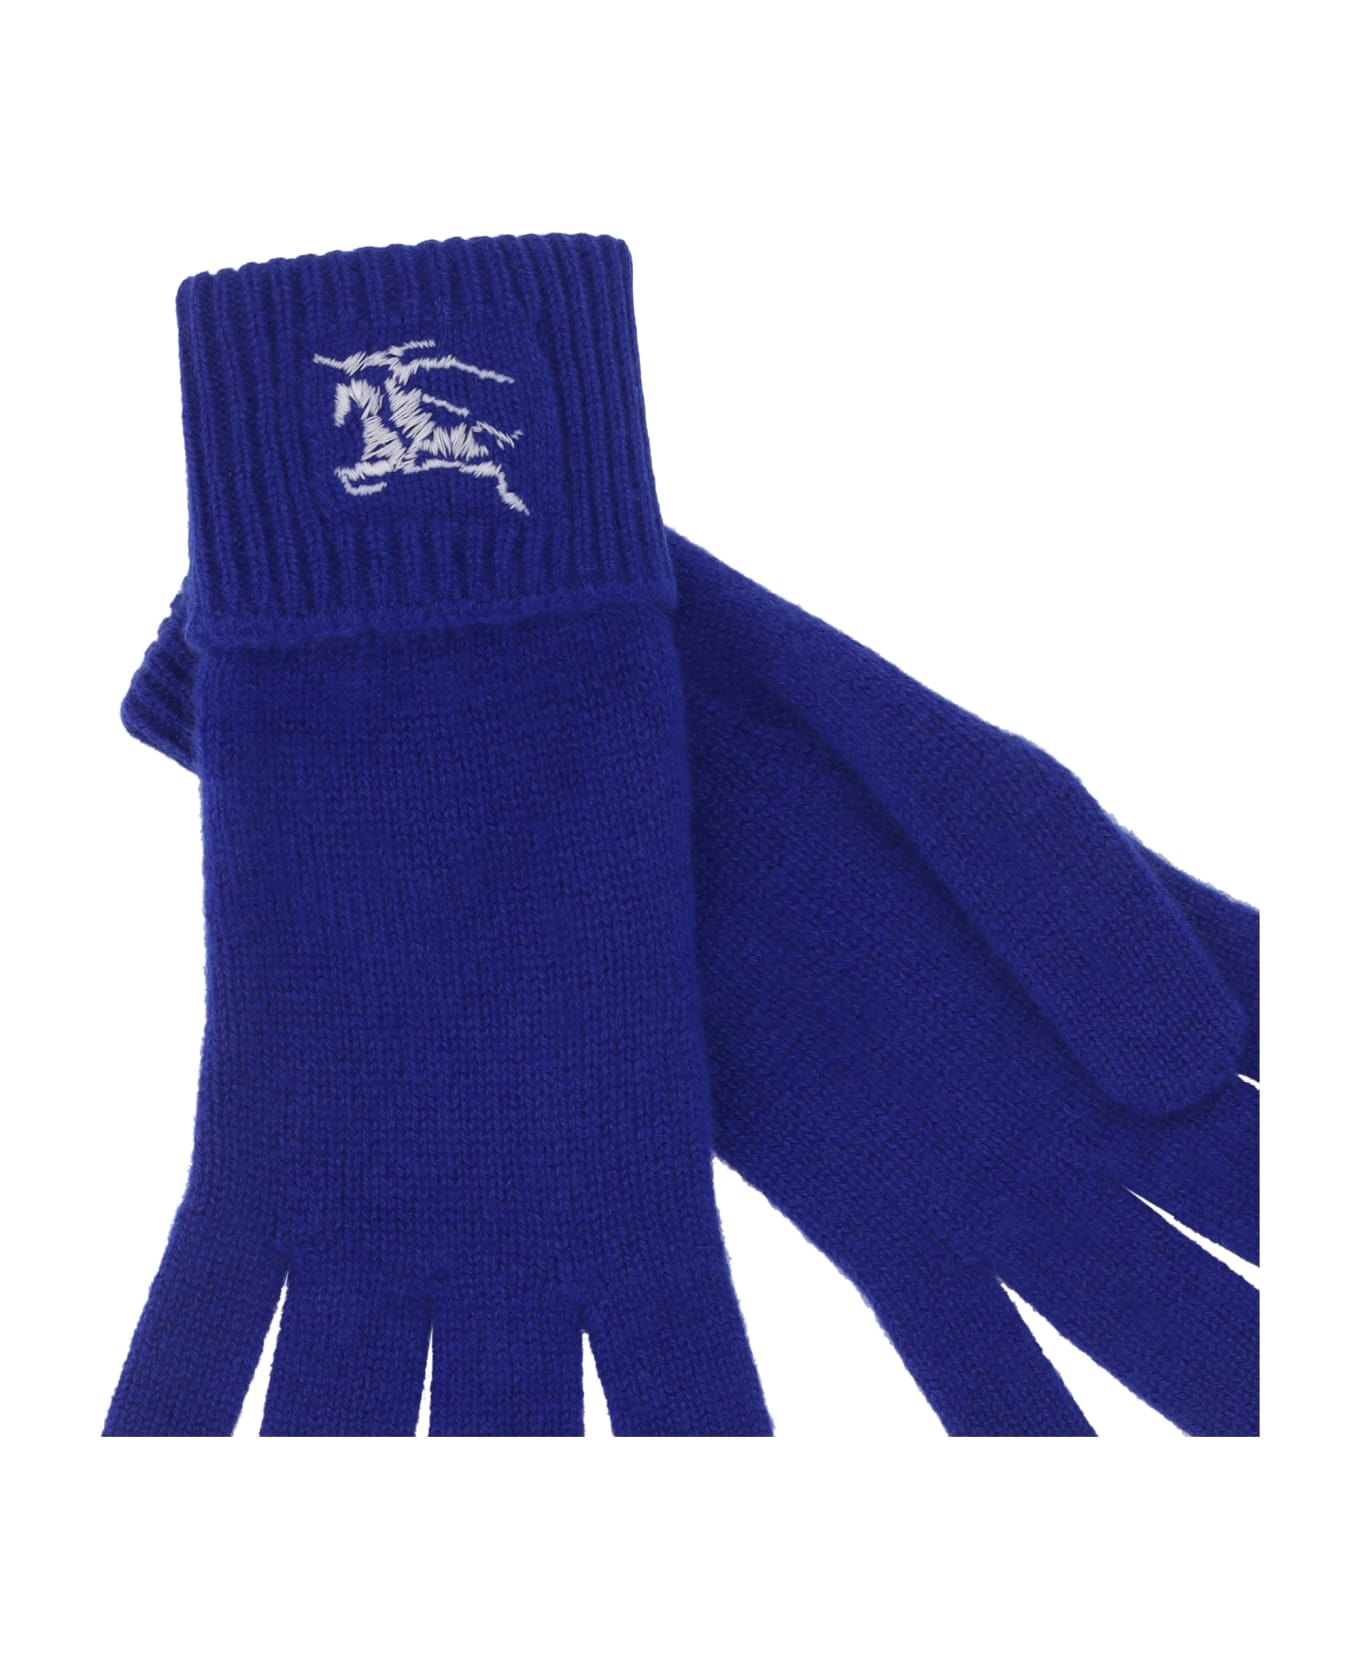 Burberry Gloves - Blue 手袋